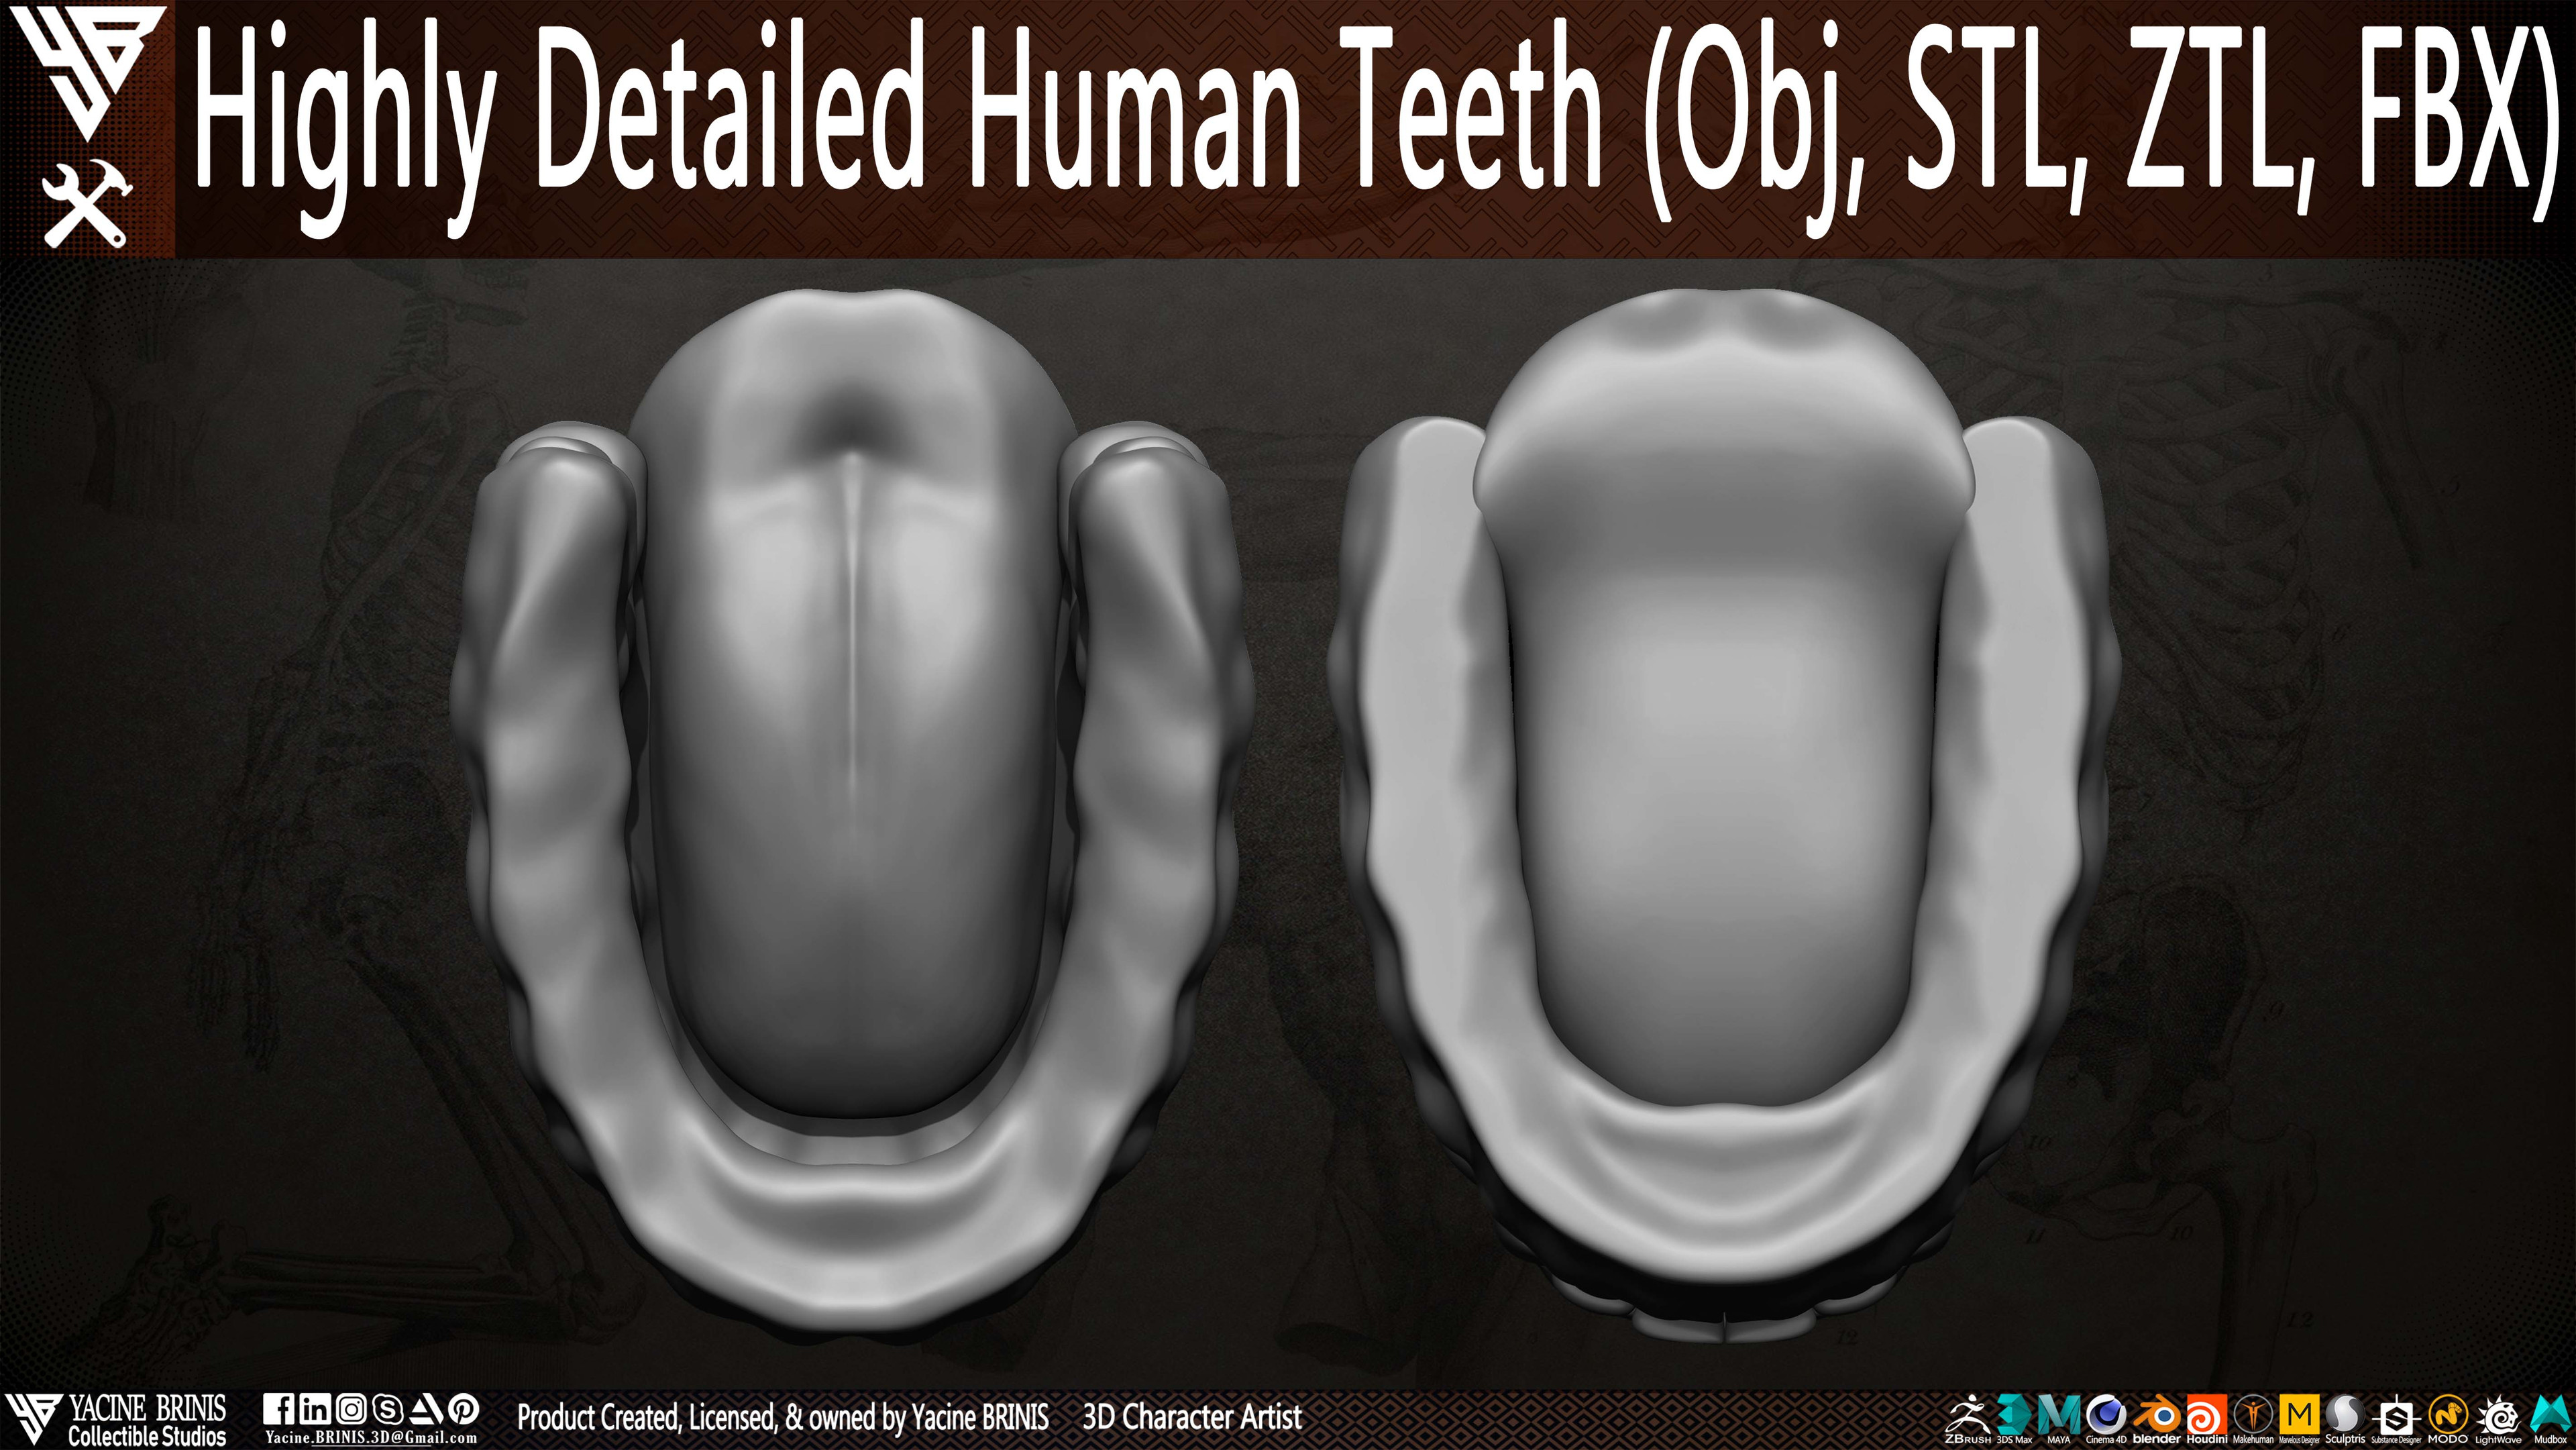 Highly Detailed Human Teeth sculpted by Yacine BRINIS 004